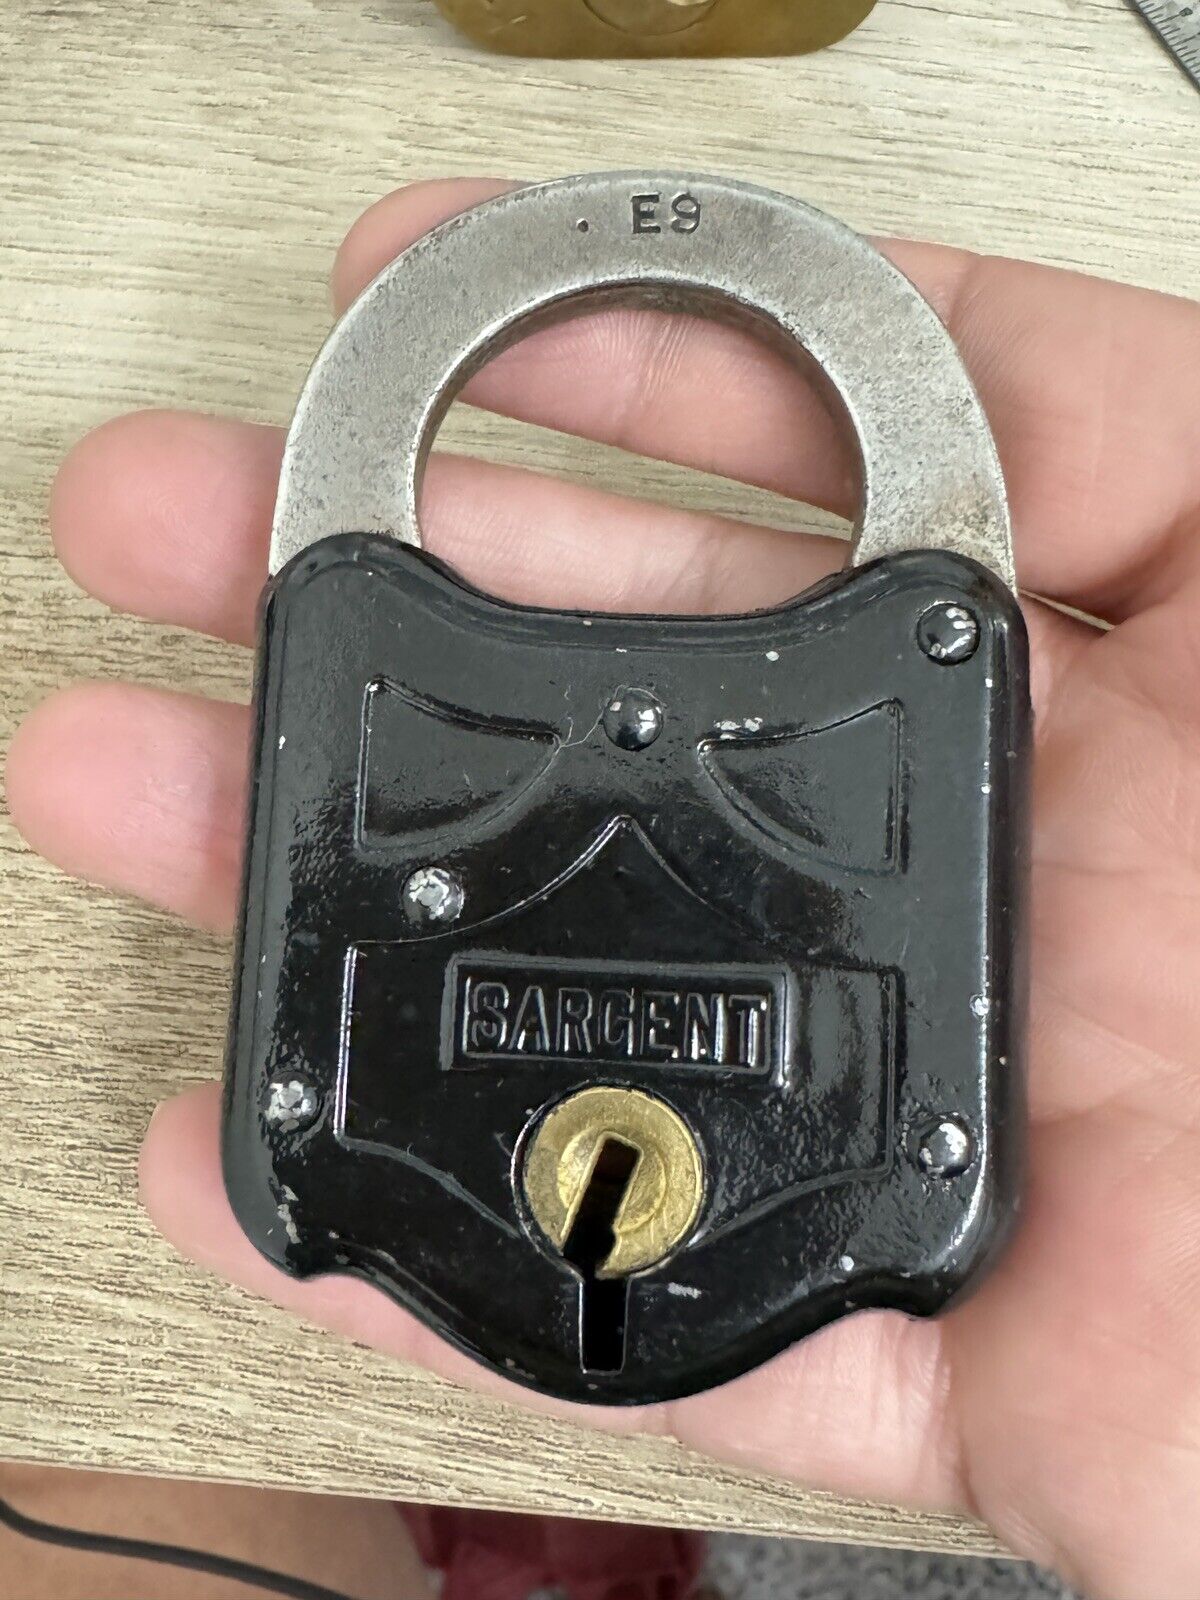 Vintage Old SARGENT Padlock Ornate No Key Lock